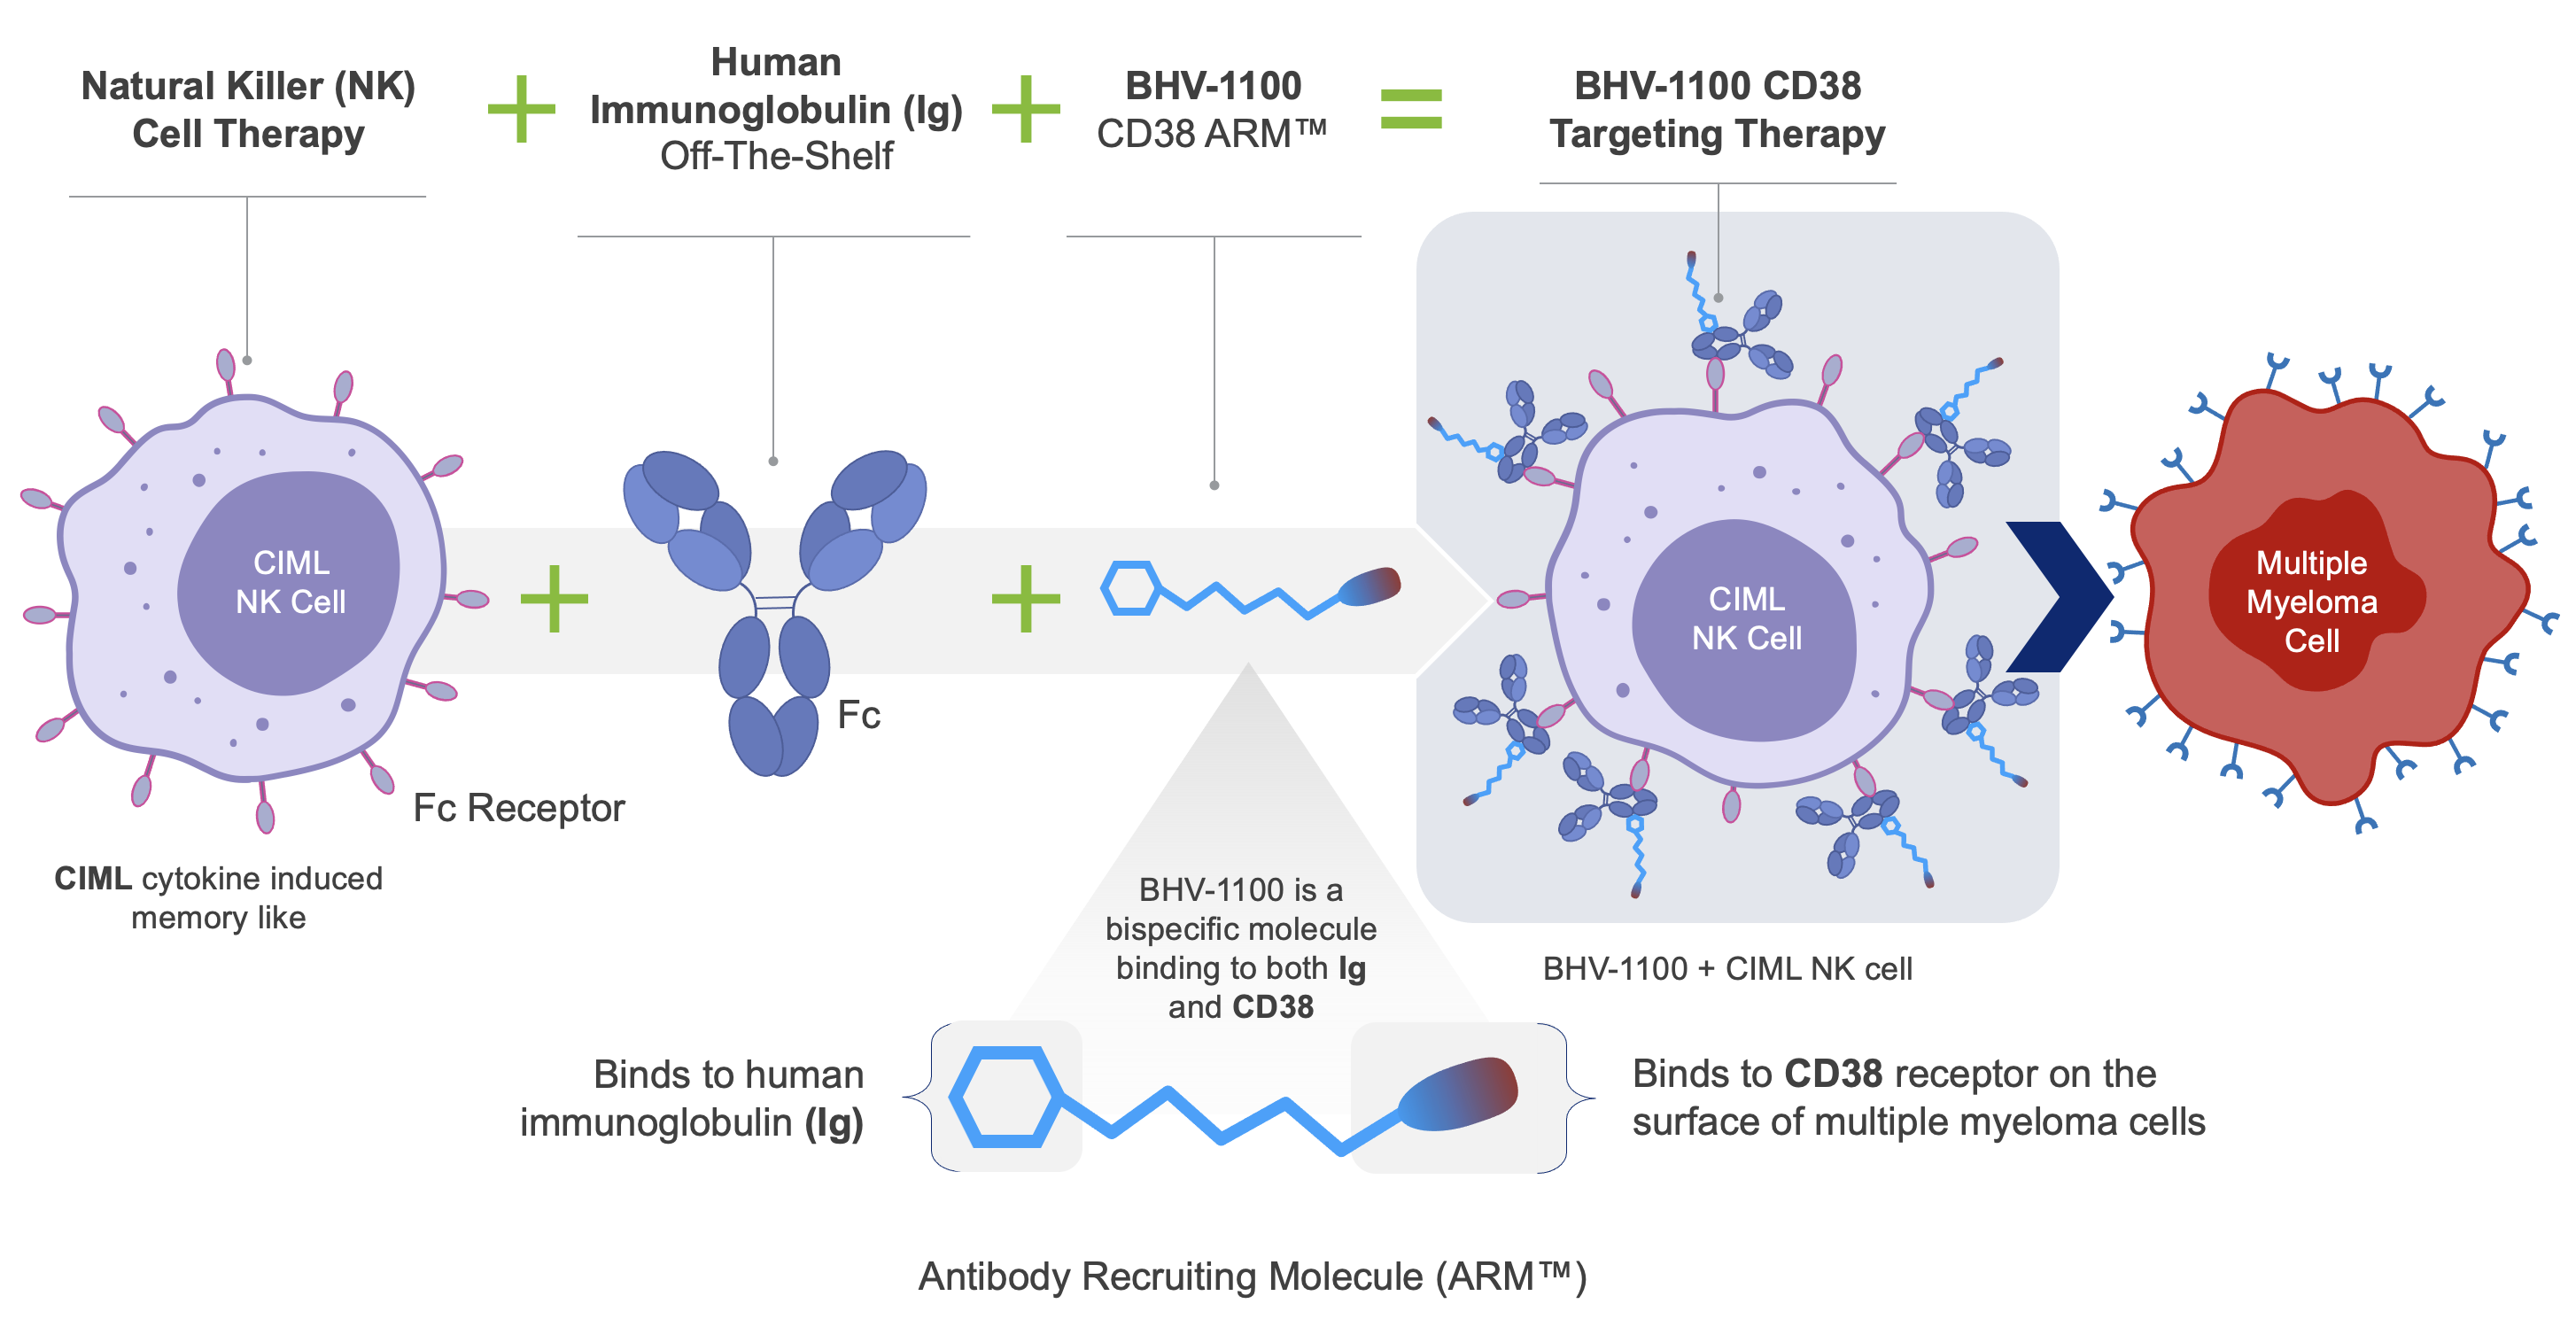 Biohaven BHV-1100 - CD38 Antibody Recruiting Molecule (ARM)+Autologous NK Cell Combination Therapy